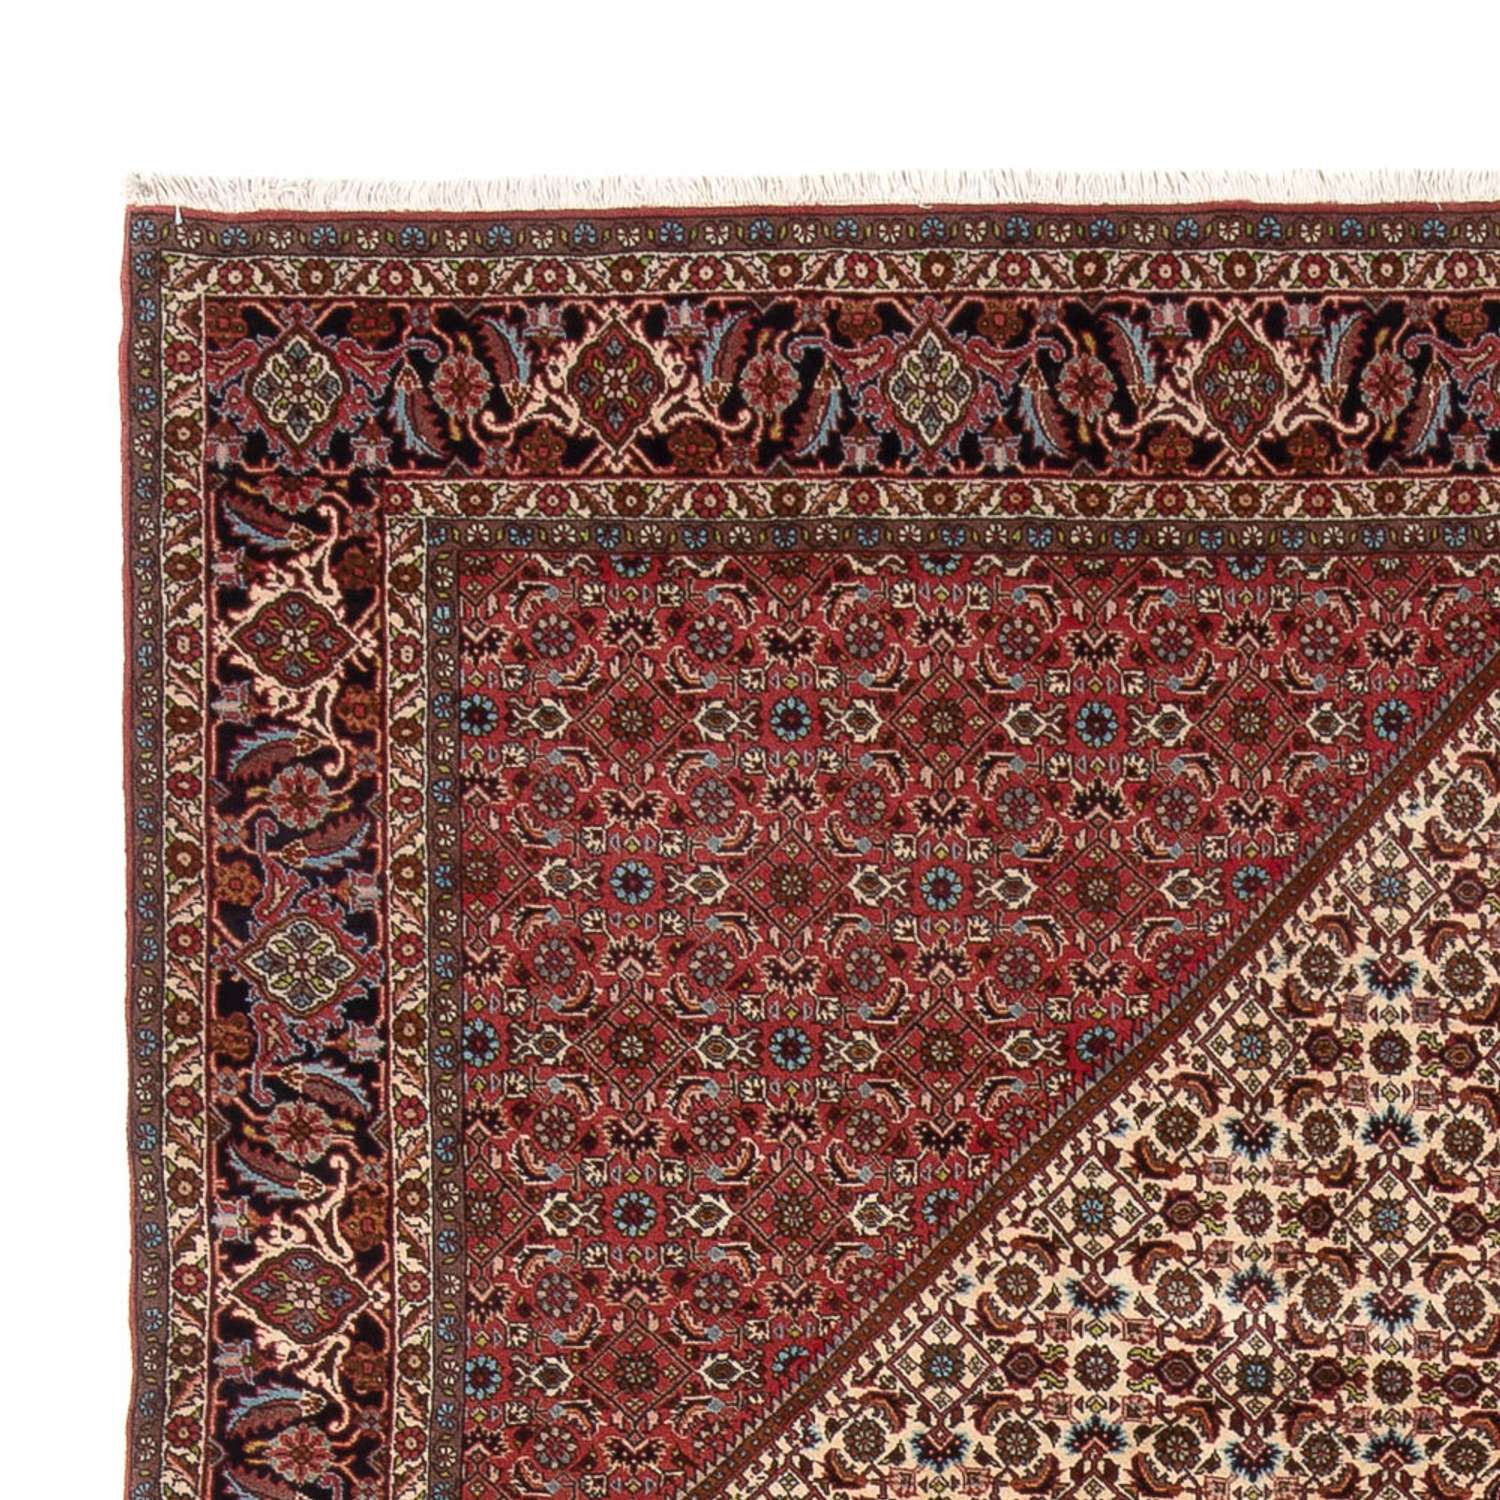 Tapis persan - Bidjar - 336 x 251 cm - rouge foncé